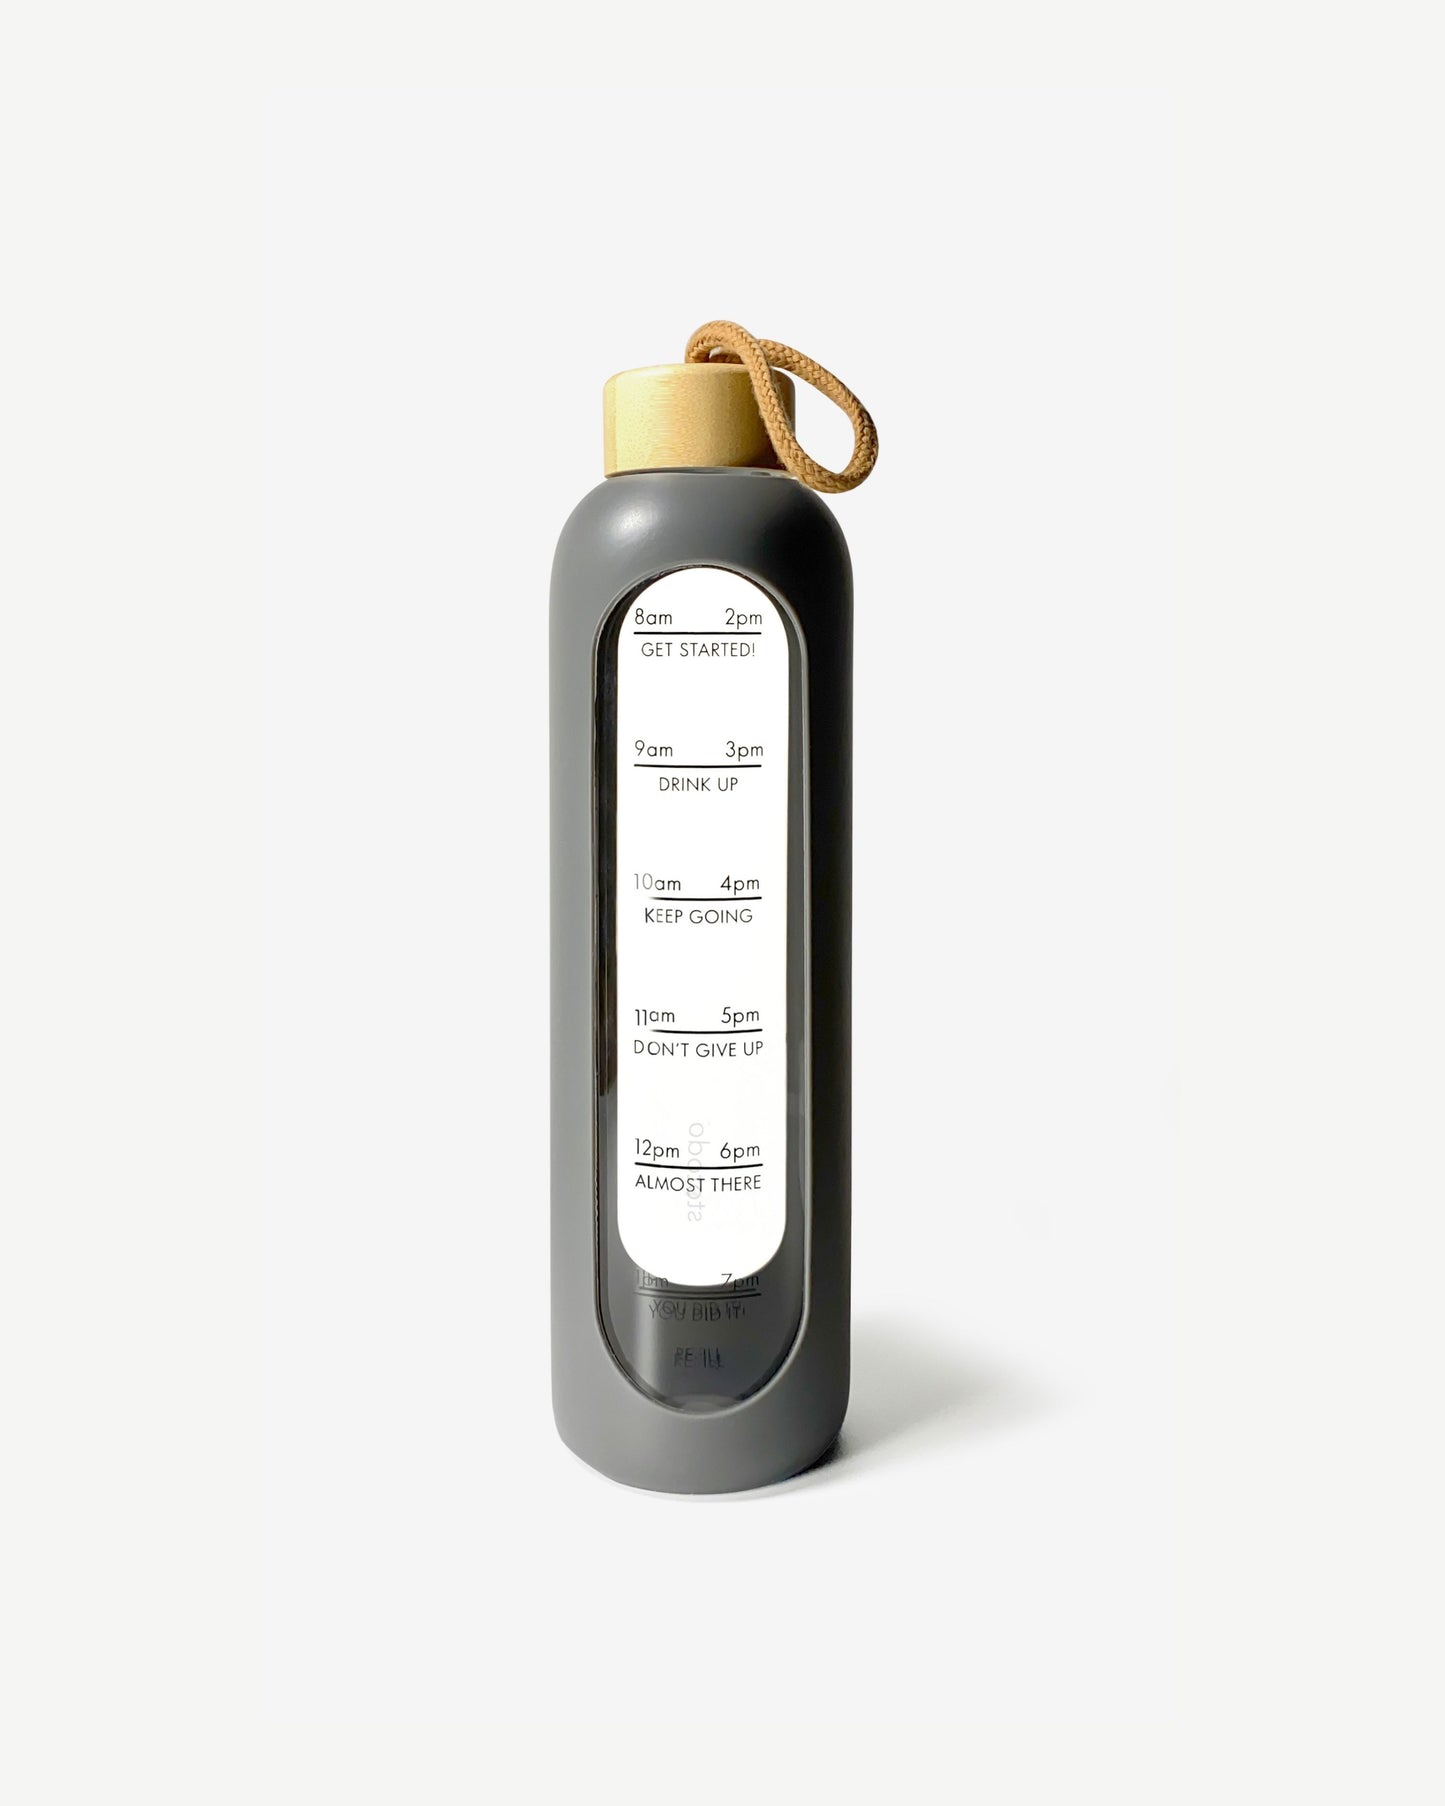 Pillar portable glass bottle